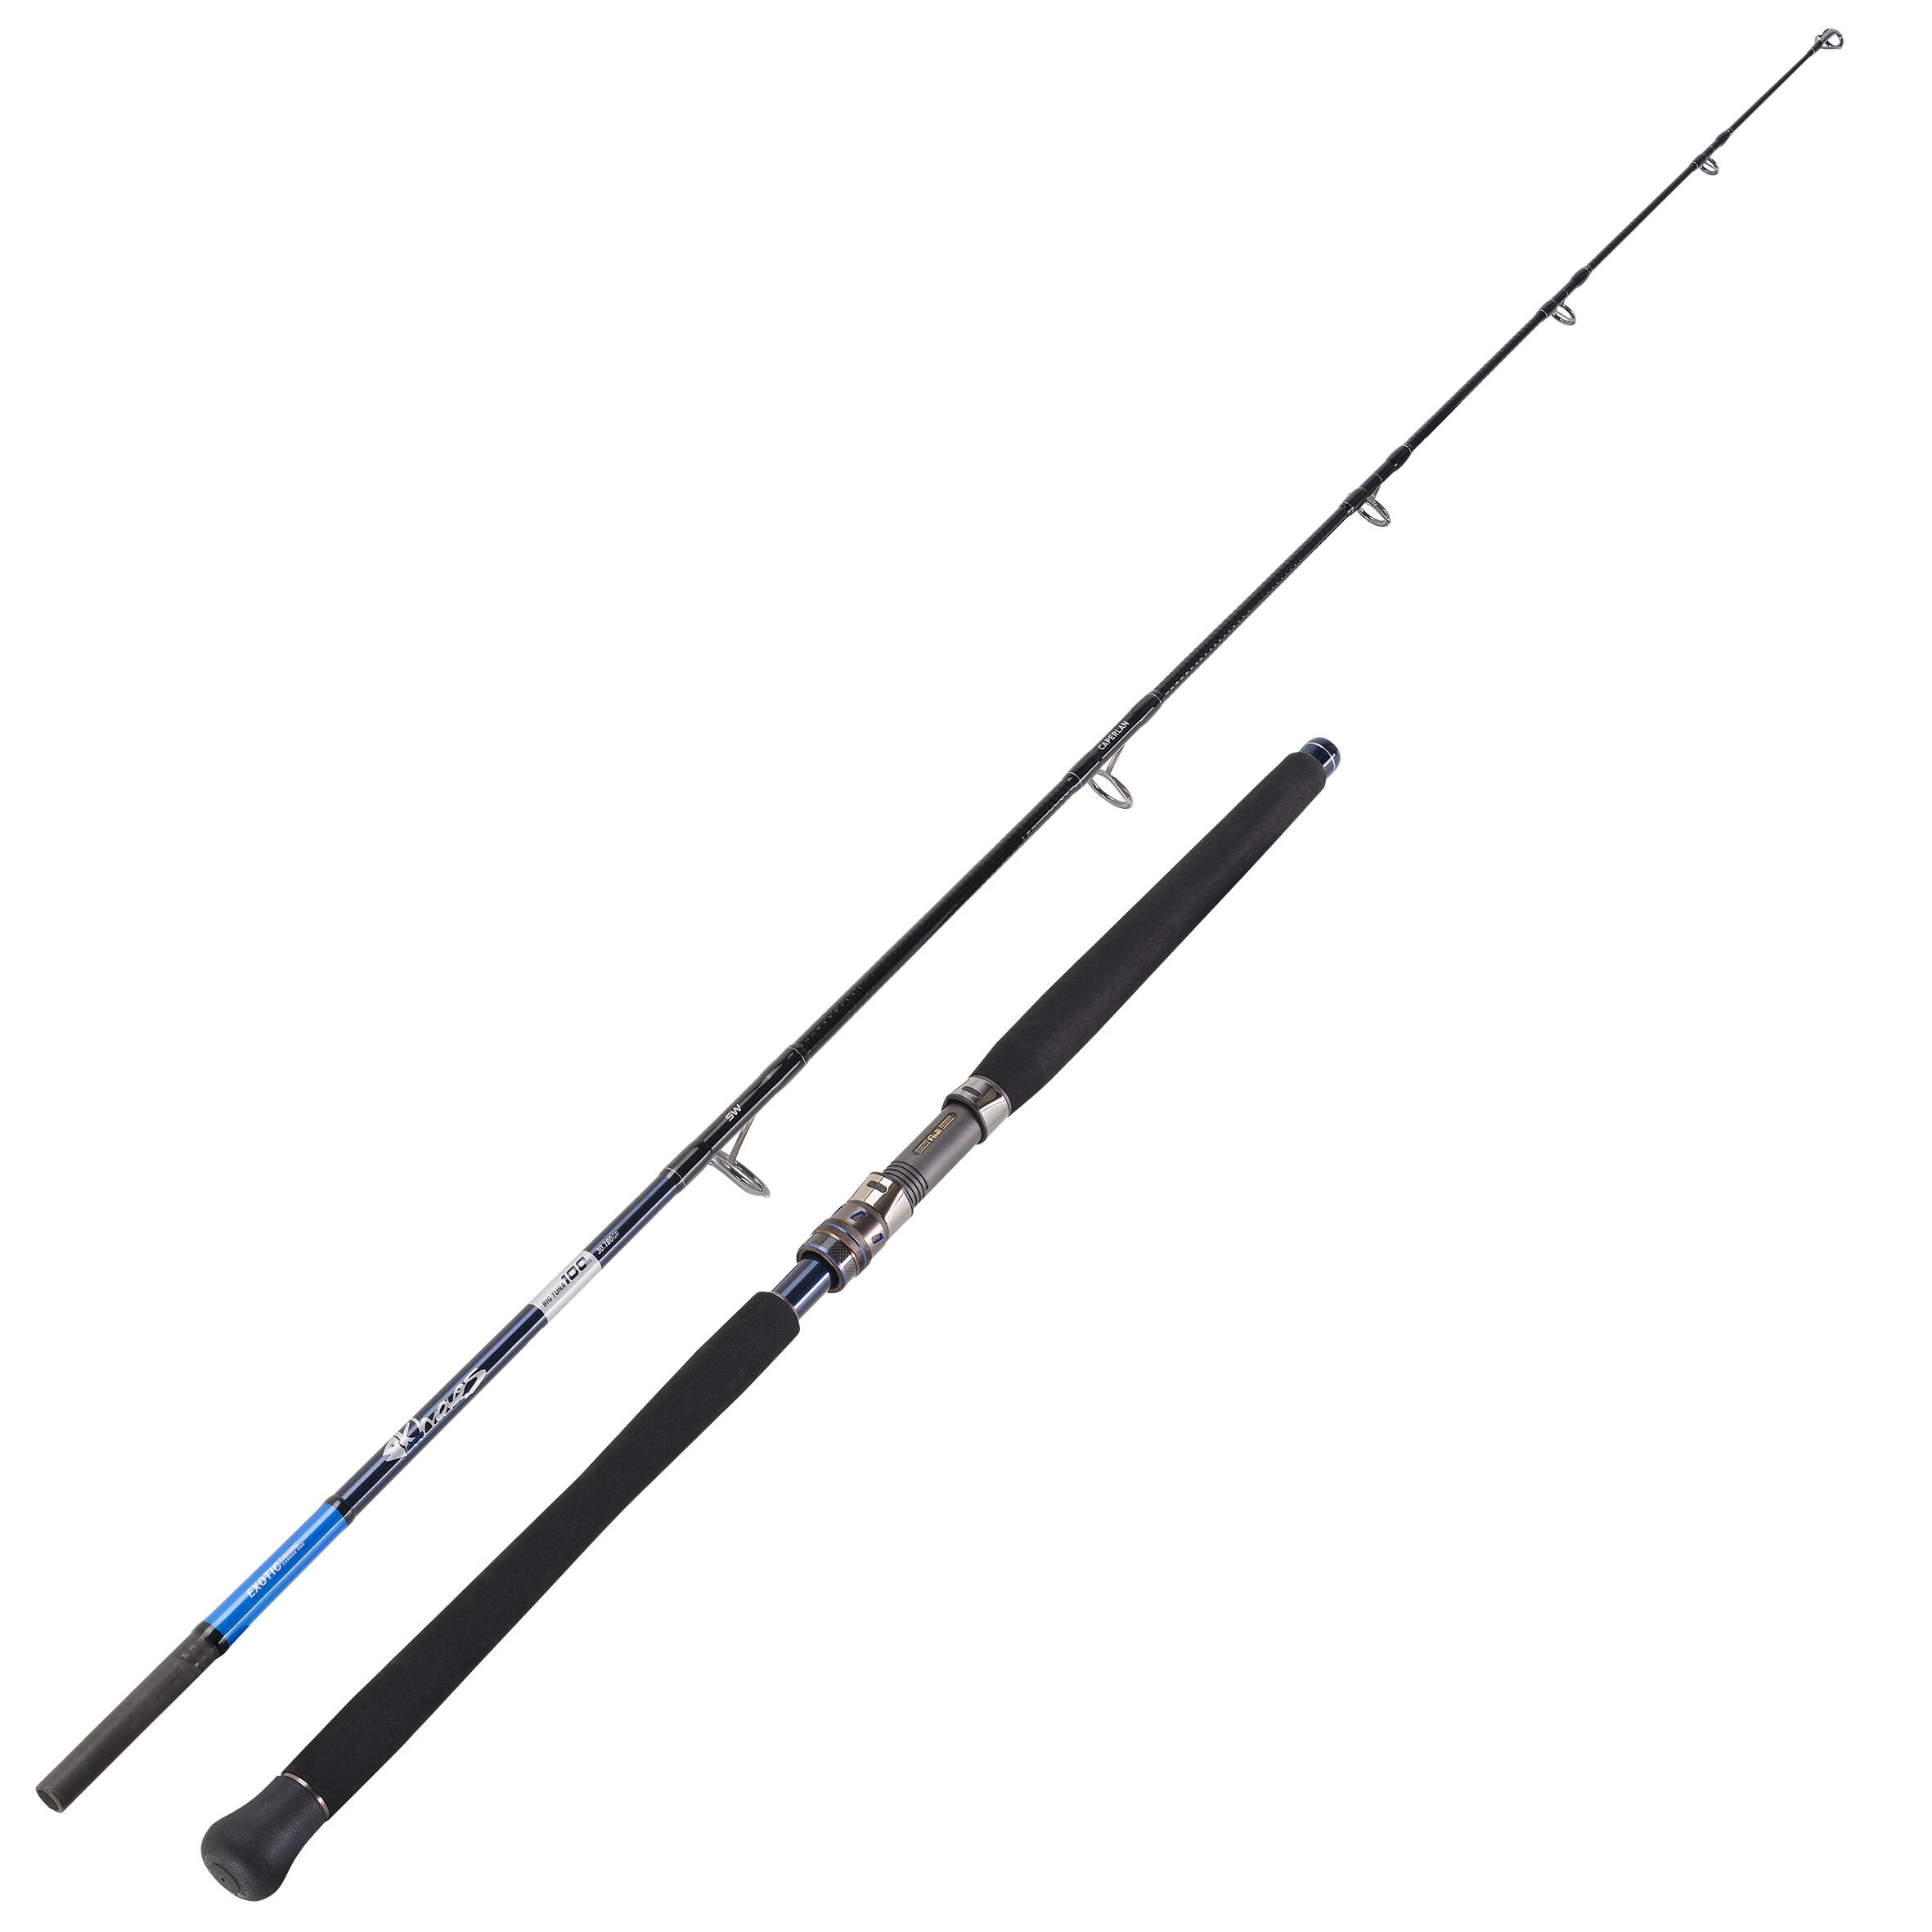 Exotic fishing rod KHAOS-900 243 100 lbs for tuna fishing in the